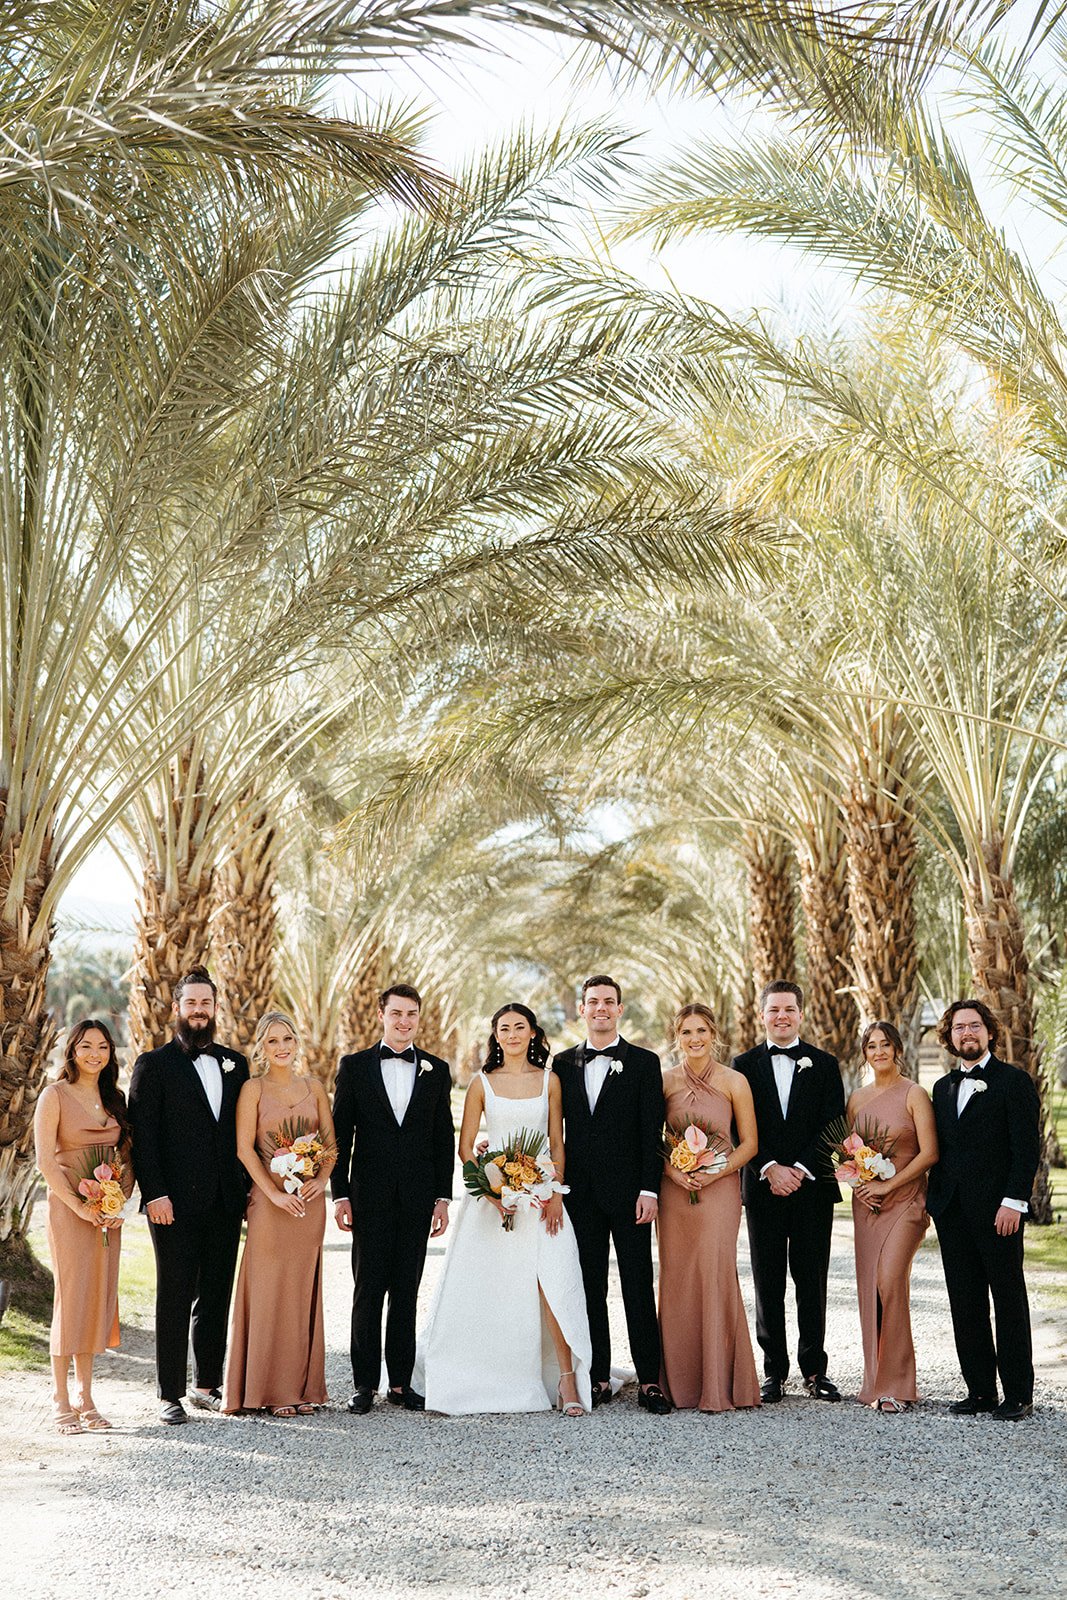  wedding party palm springs desert wedding Anne Barge Coraline 